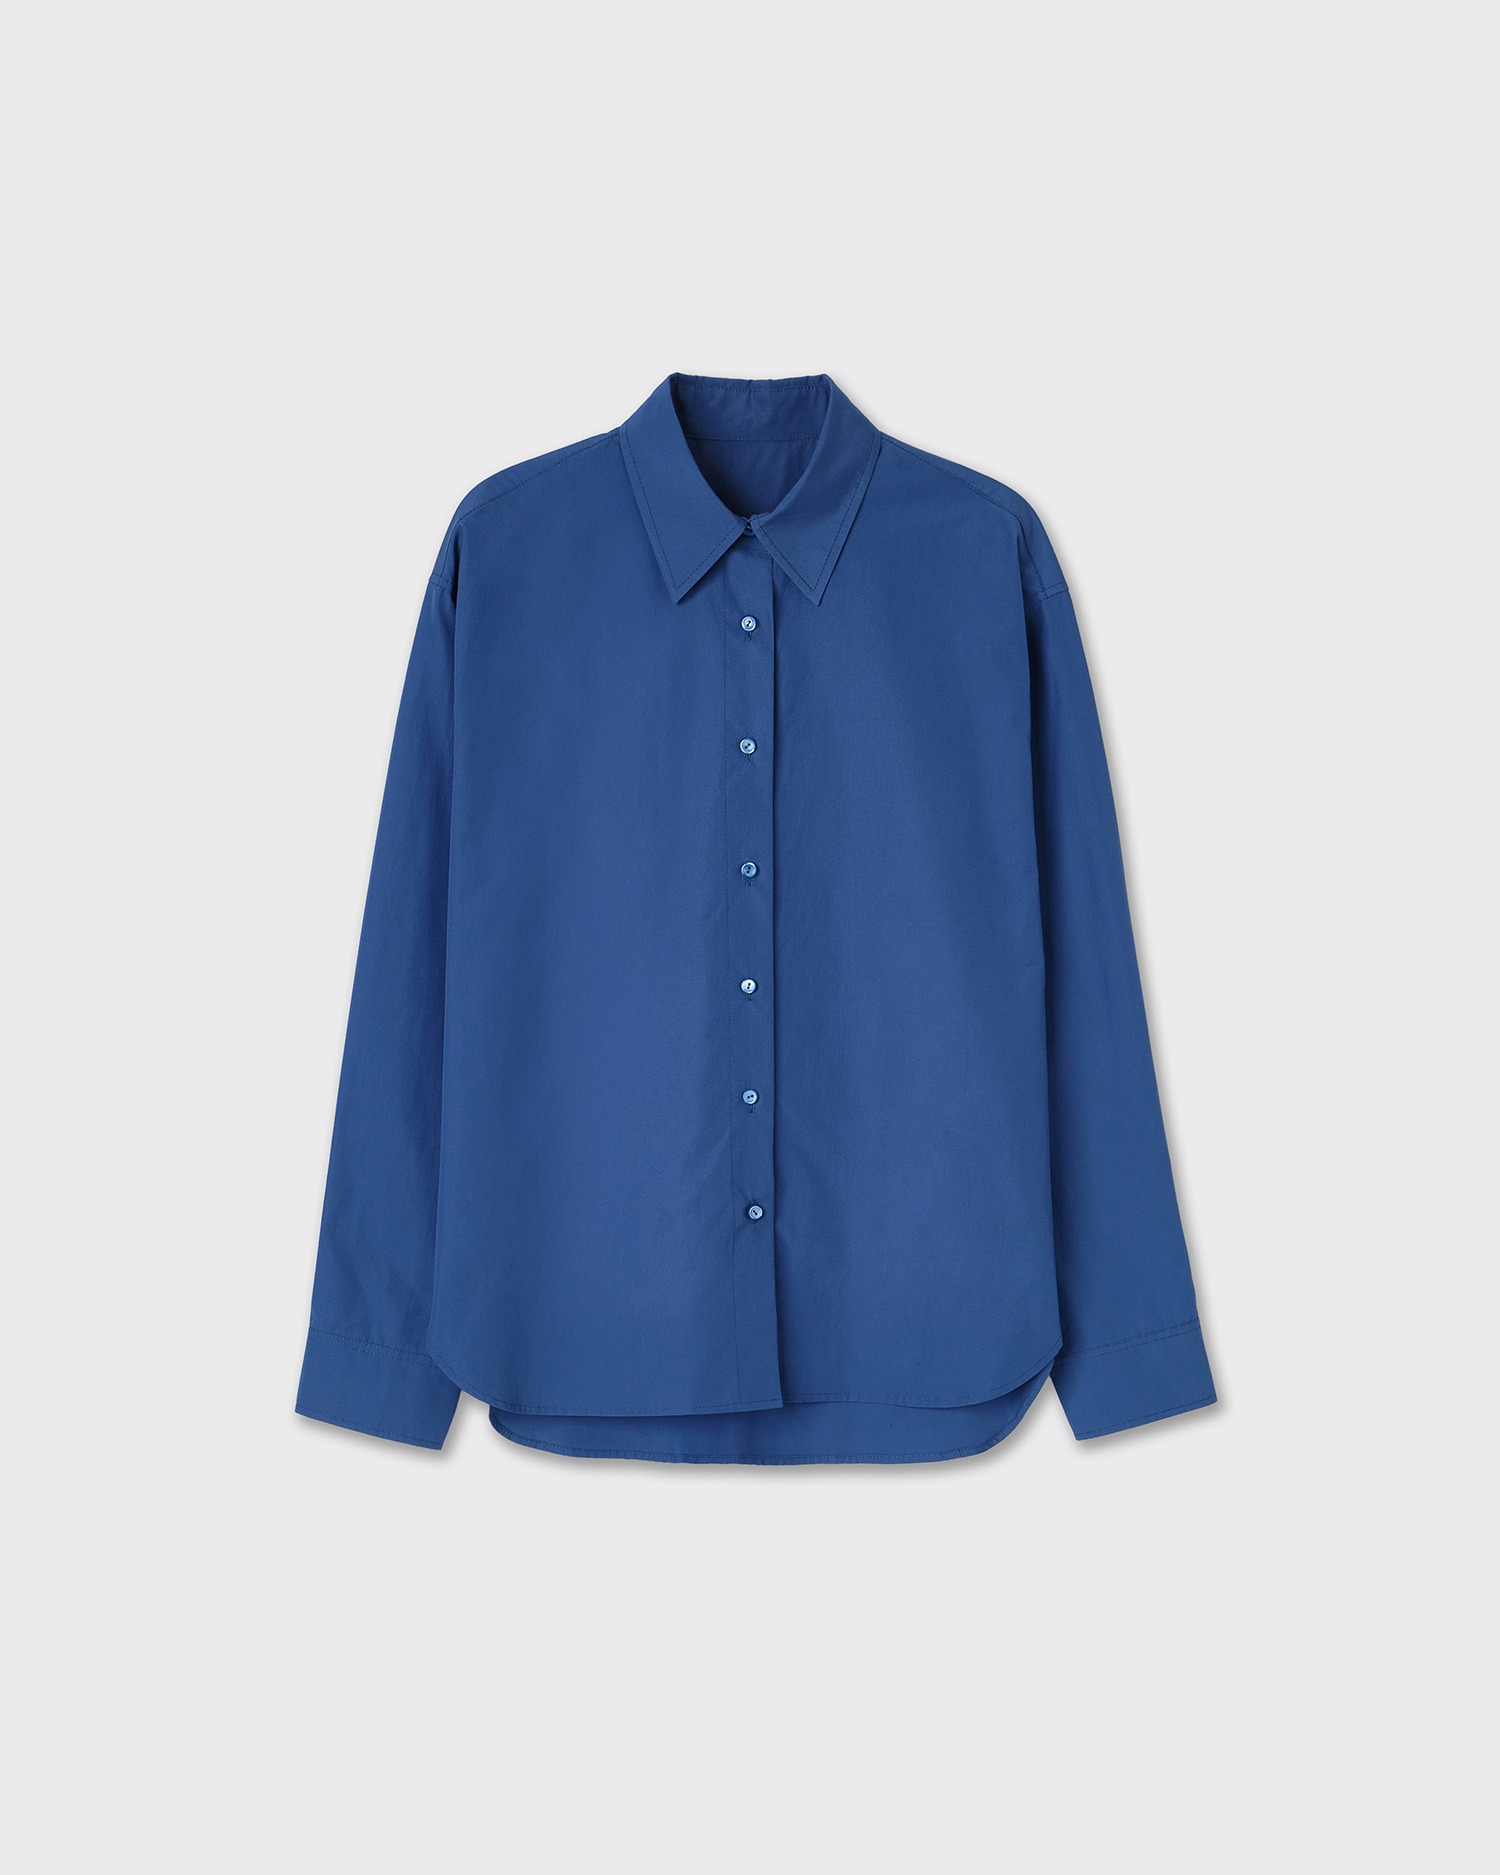 Classic Office Shirts - Cobalt Blue